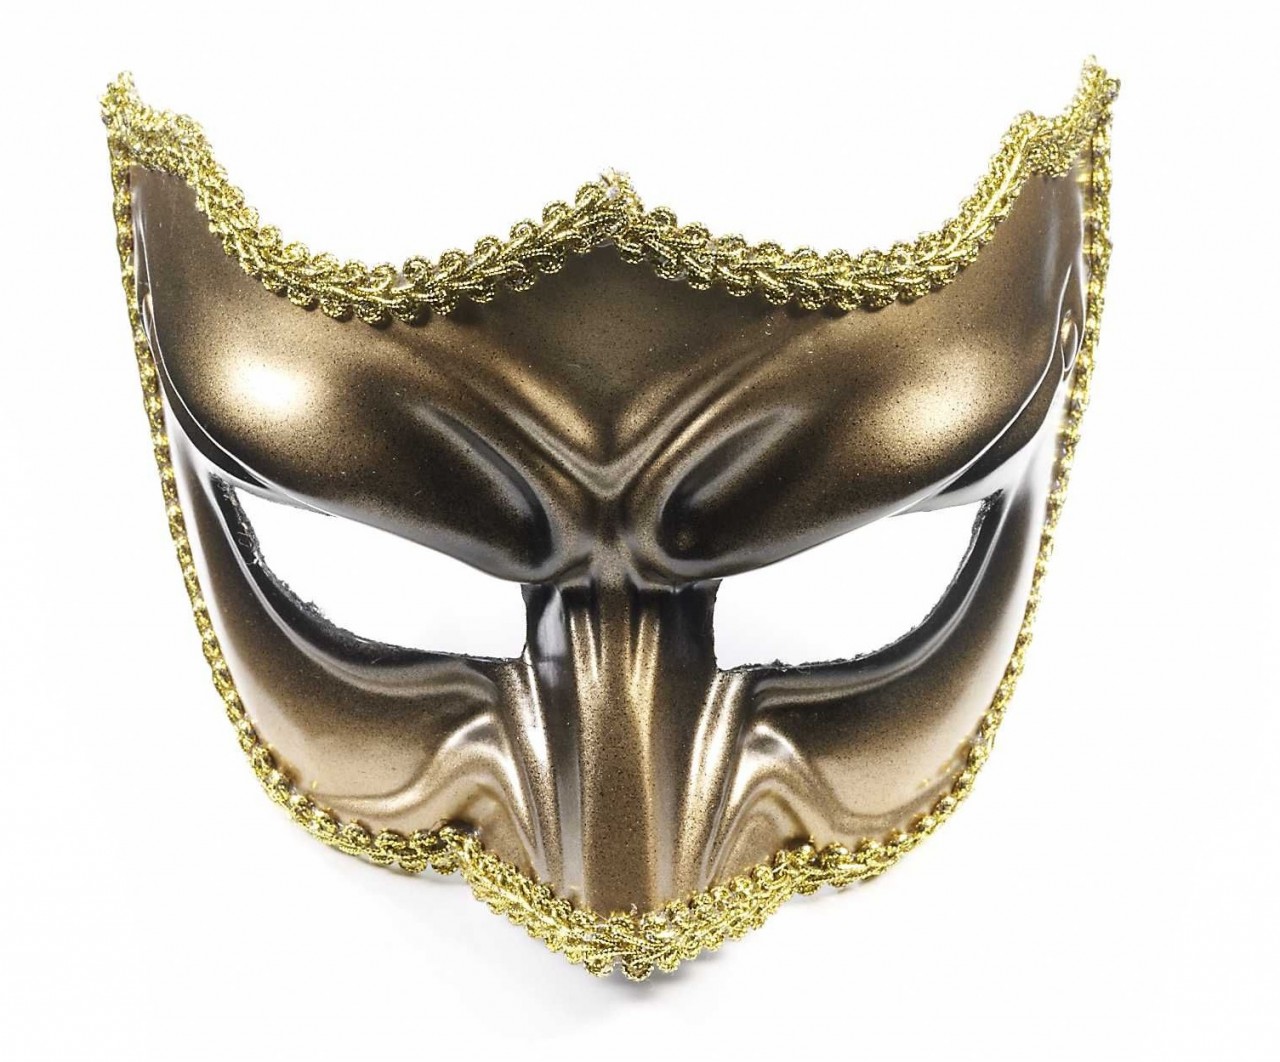 Gold and Black Men's Masquerade Mask